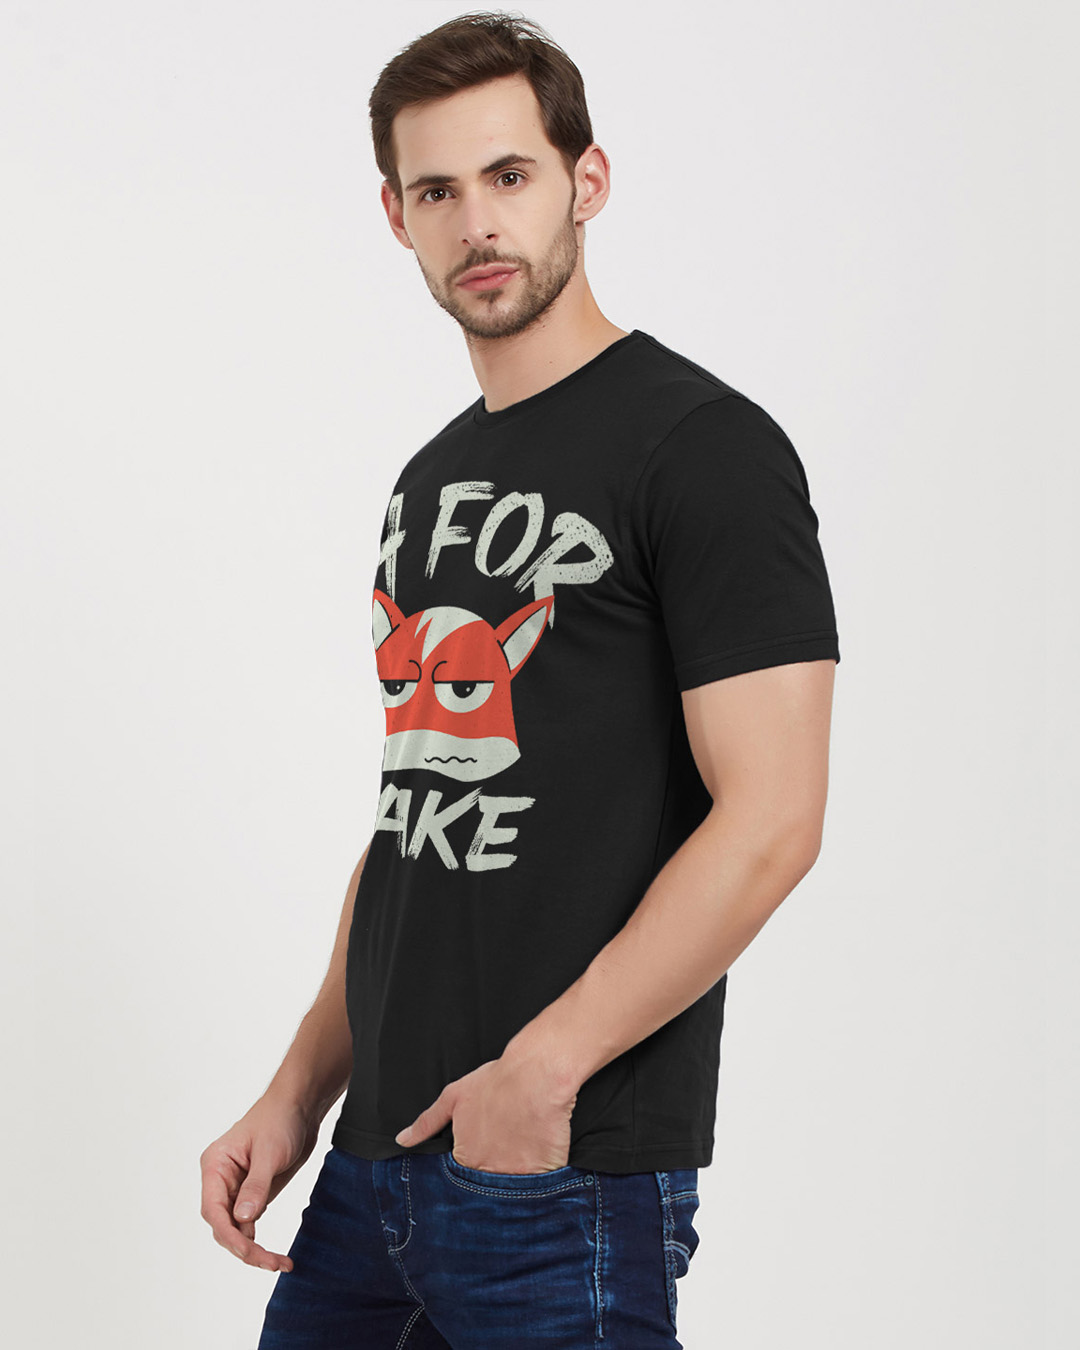 Shop For Fox Sake Cotton Half Sleeves T-Shirt-Back